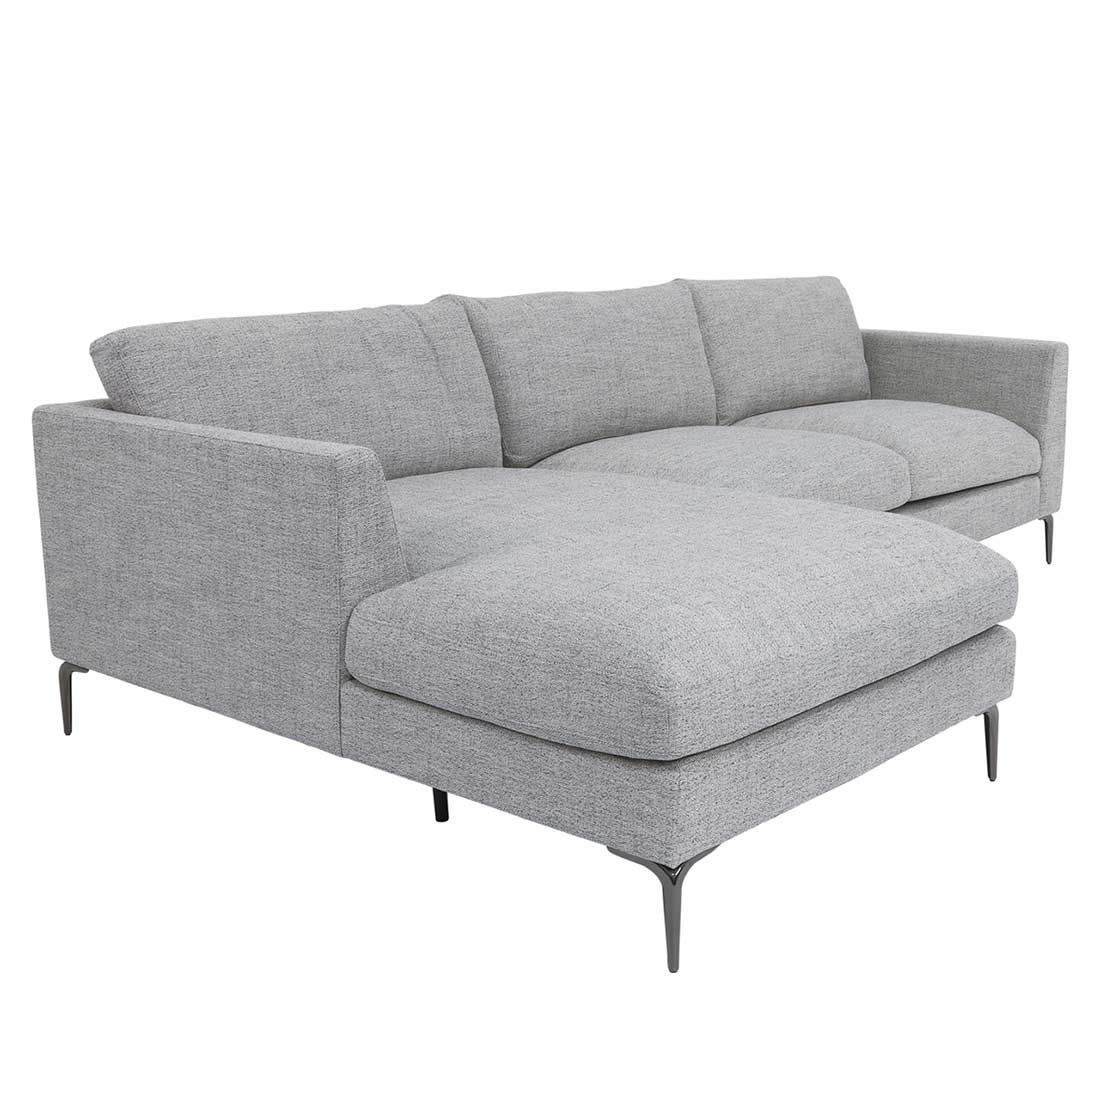 Light Gray fabric sectional sofa SB 726 Fabric Sectional Sofas